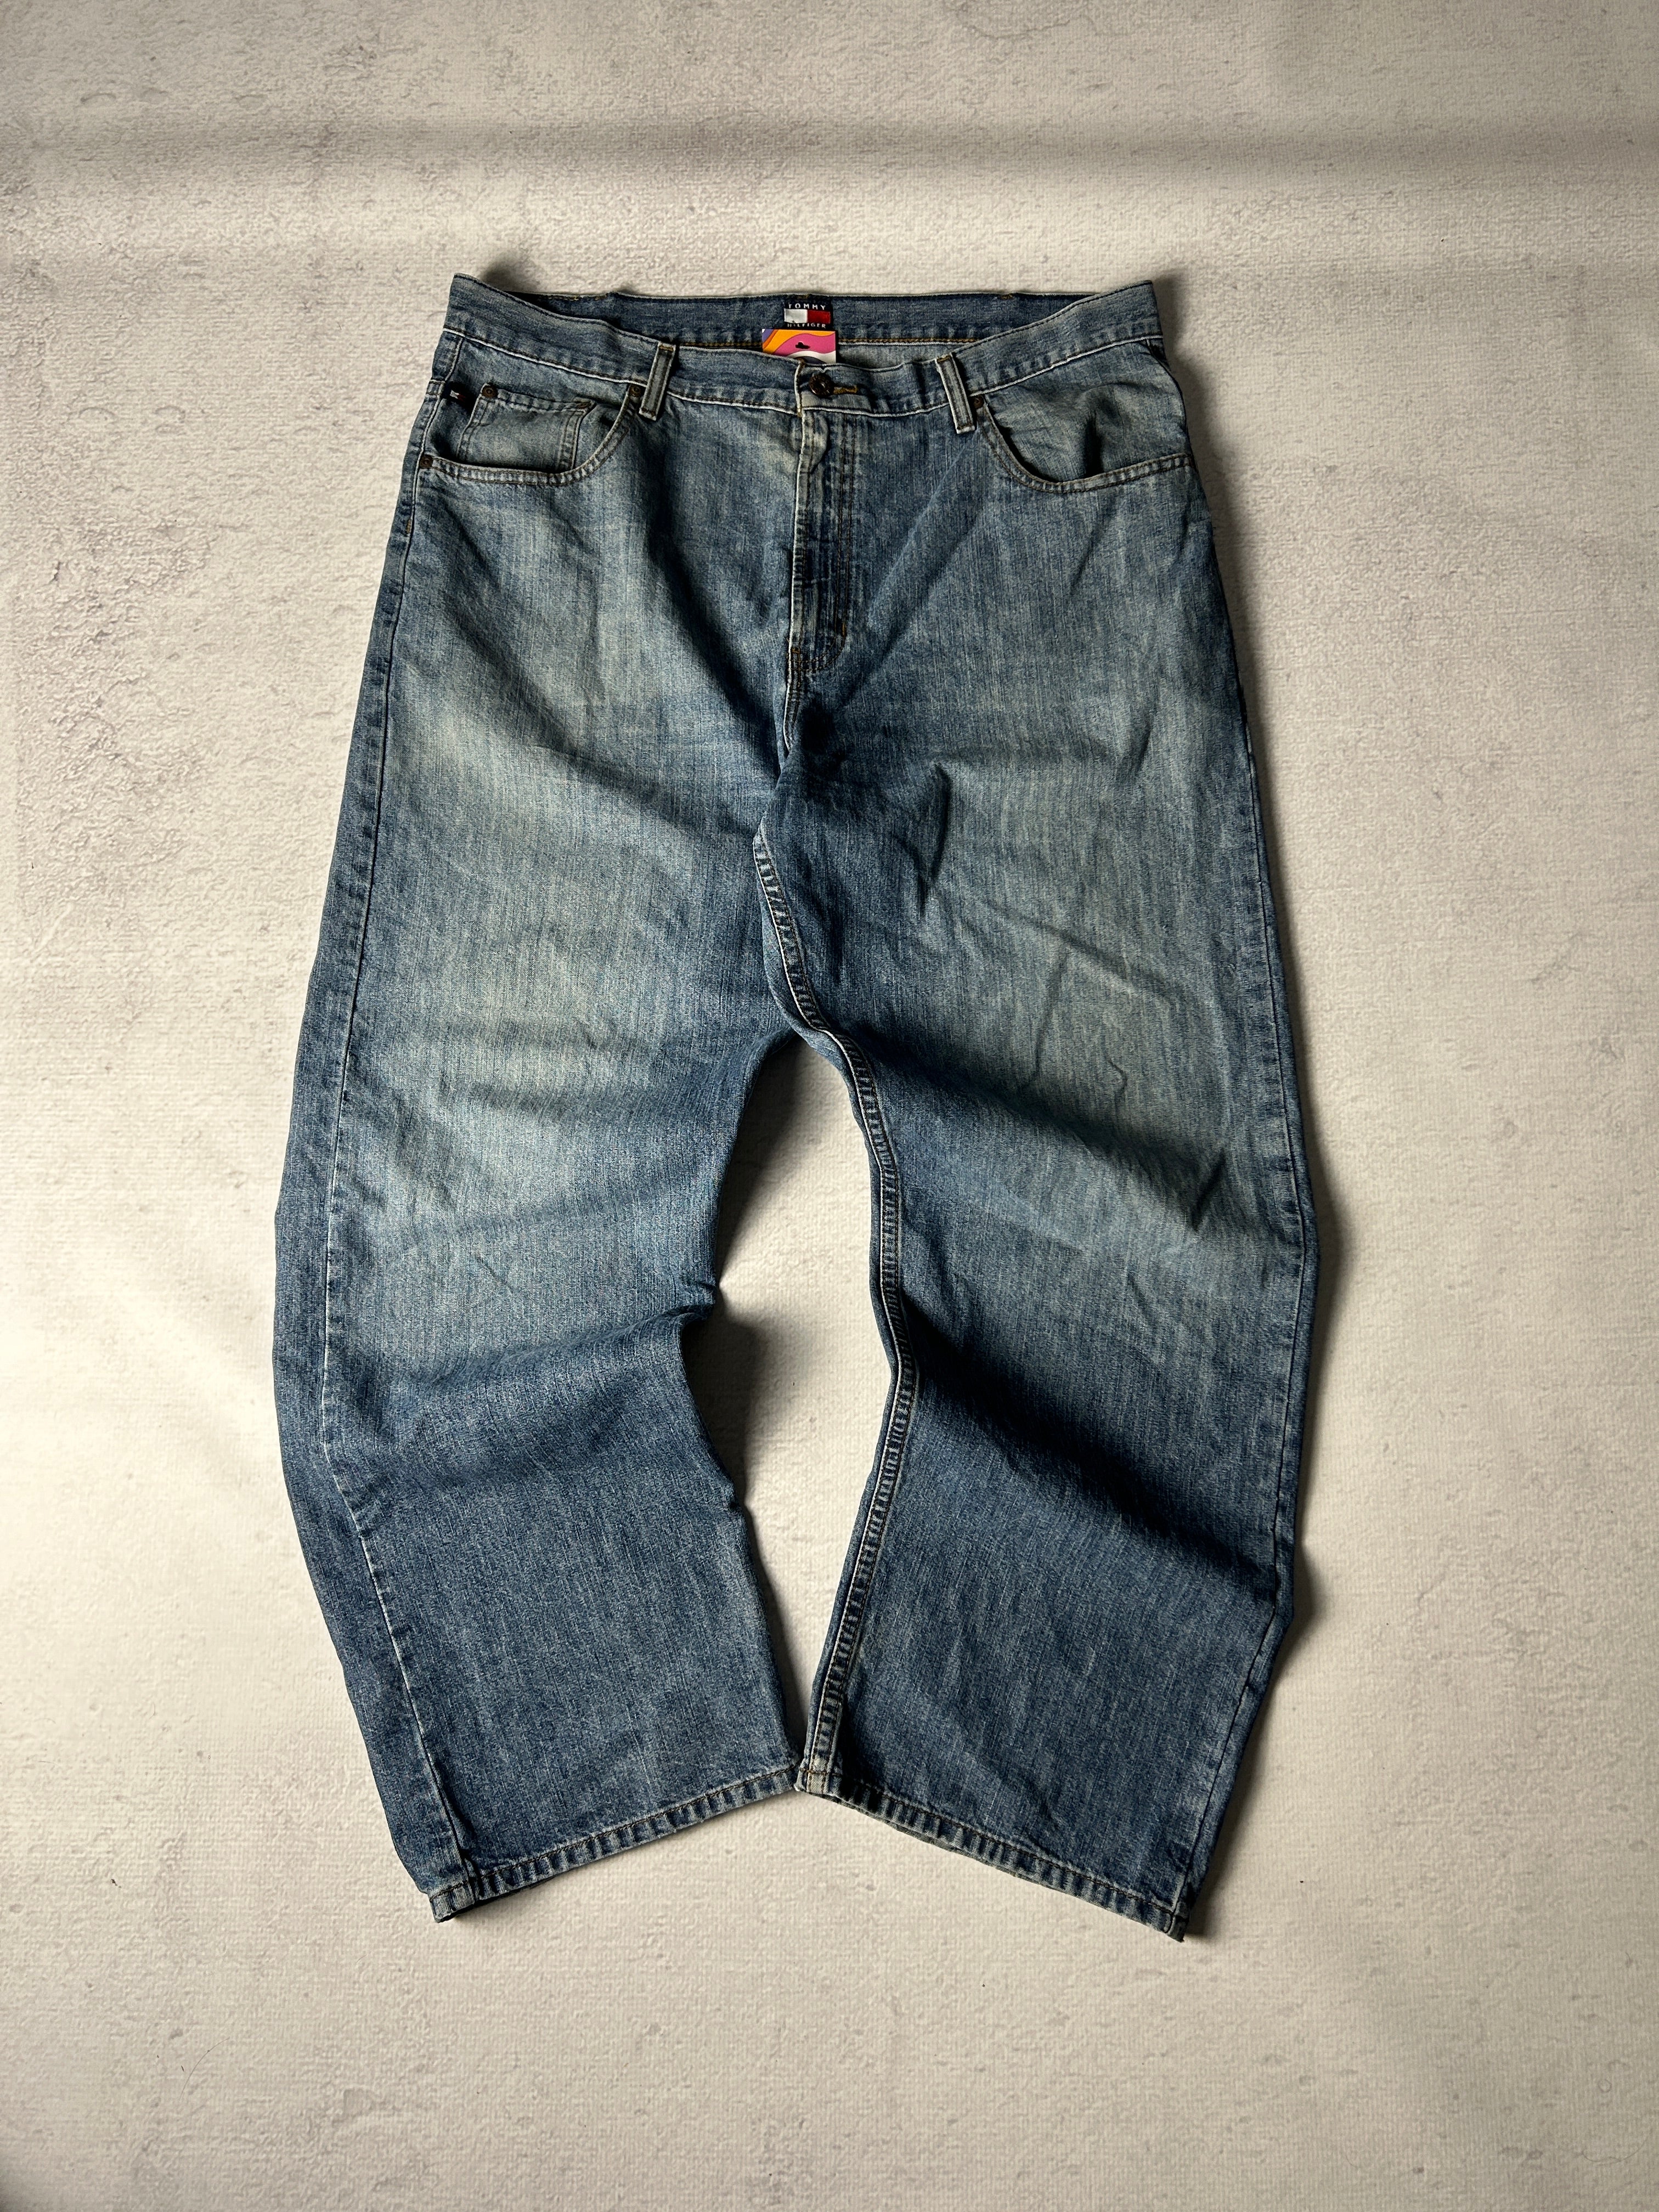 Vintage Tommy Hilfiger Jeans - Men's 38W30L